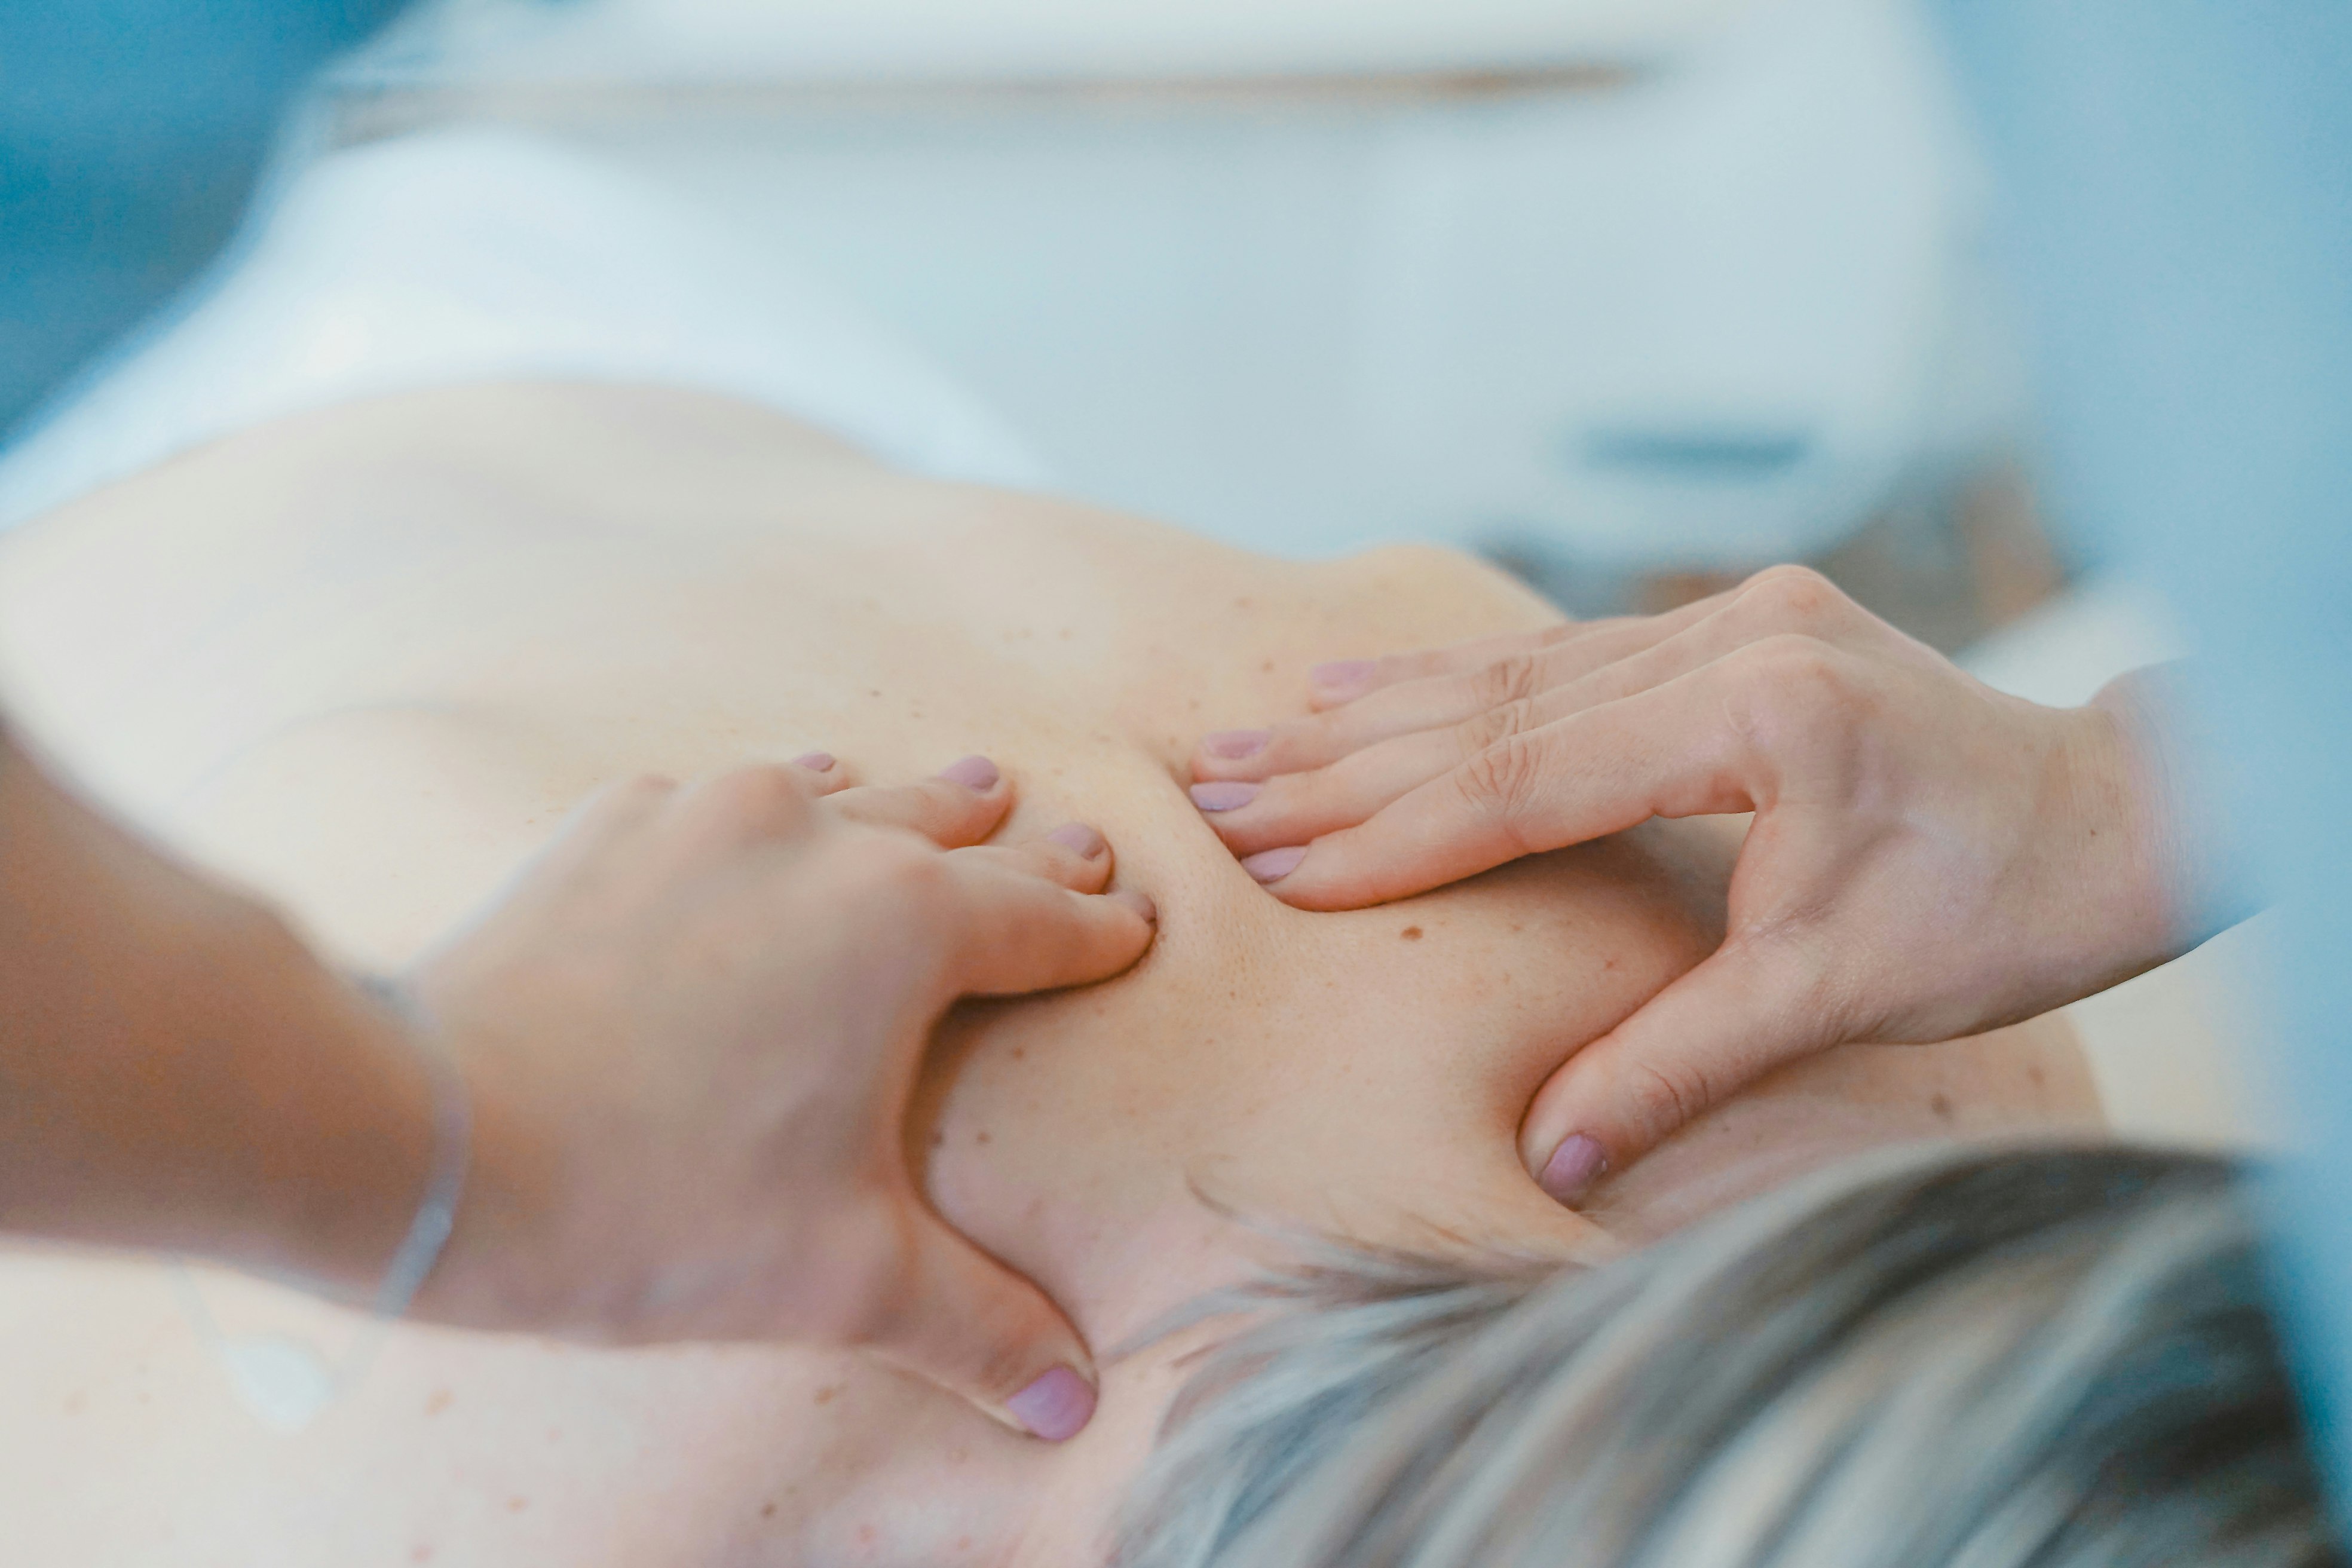 Lomi Lomi Massage Training, Usual Lomi massage is generally…